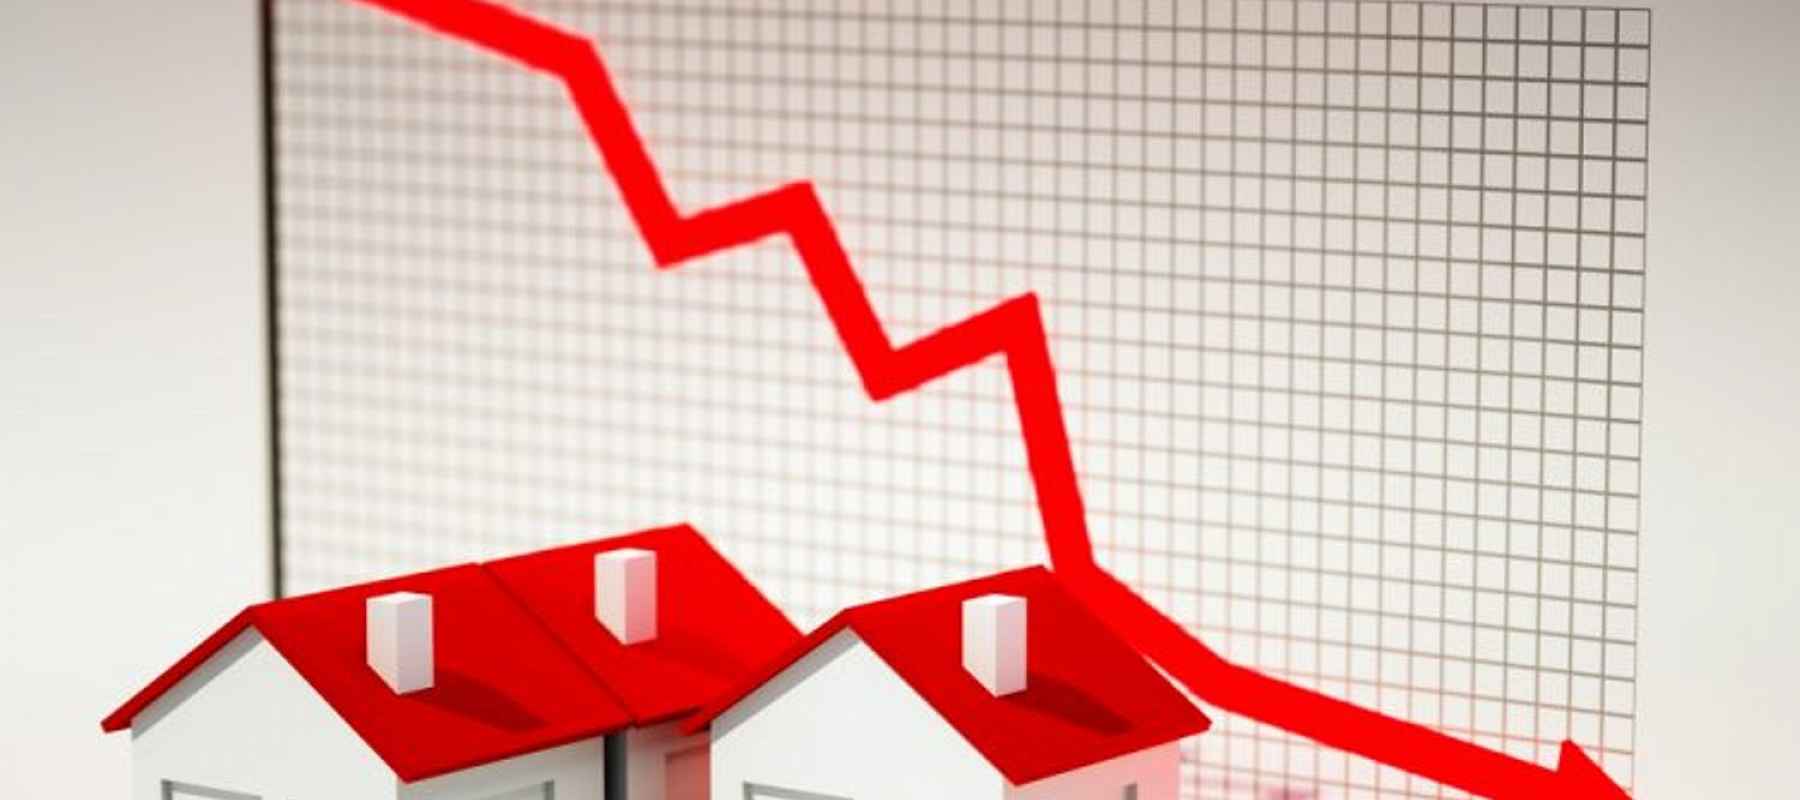 Denver Housing Market Slowing Down